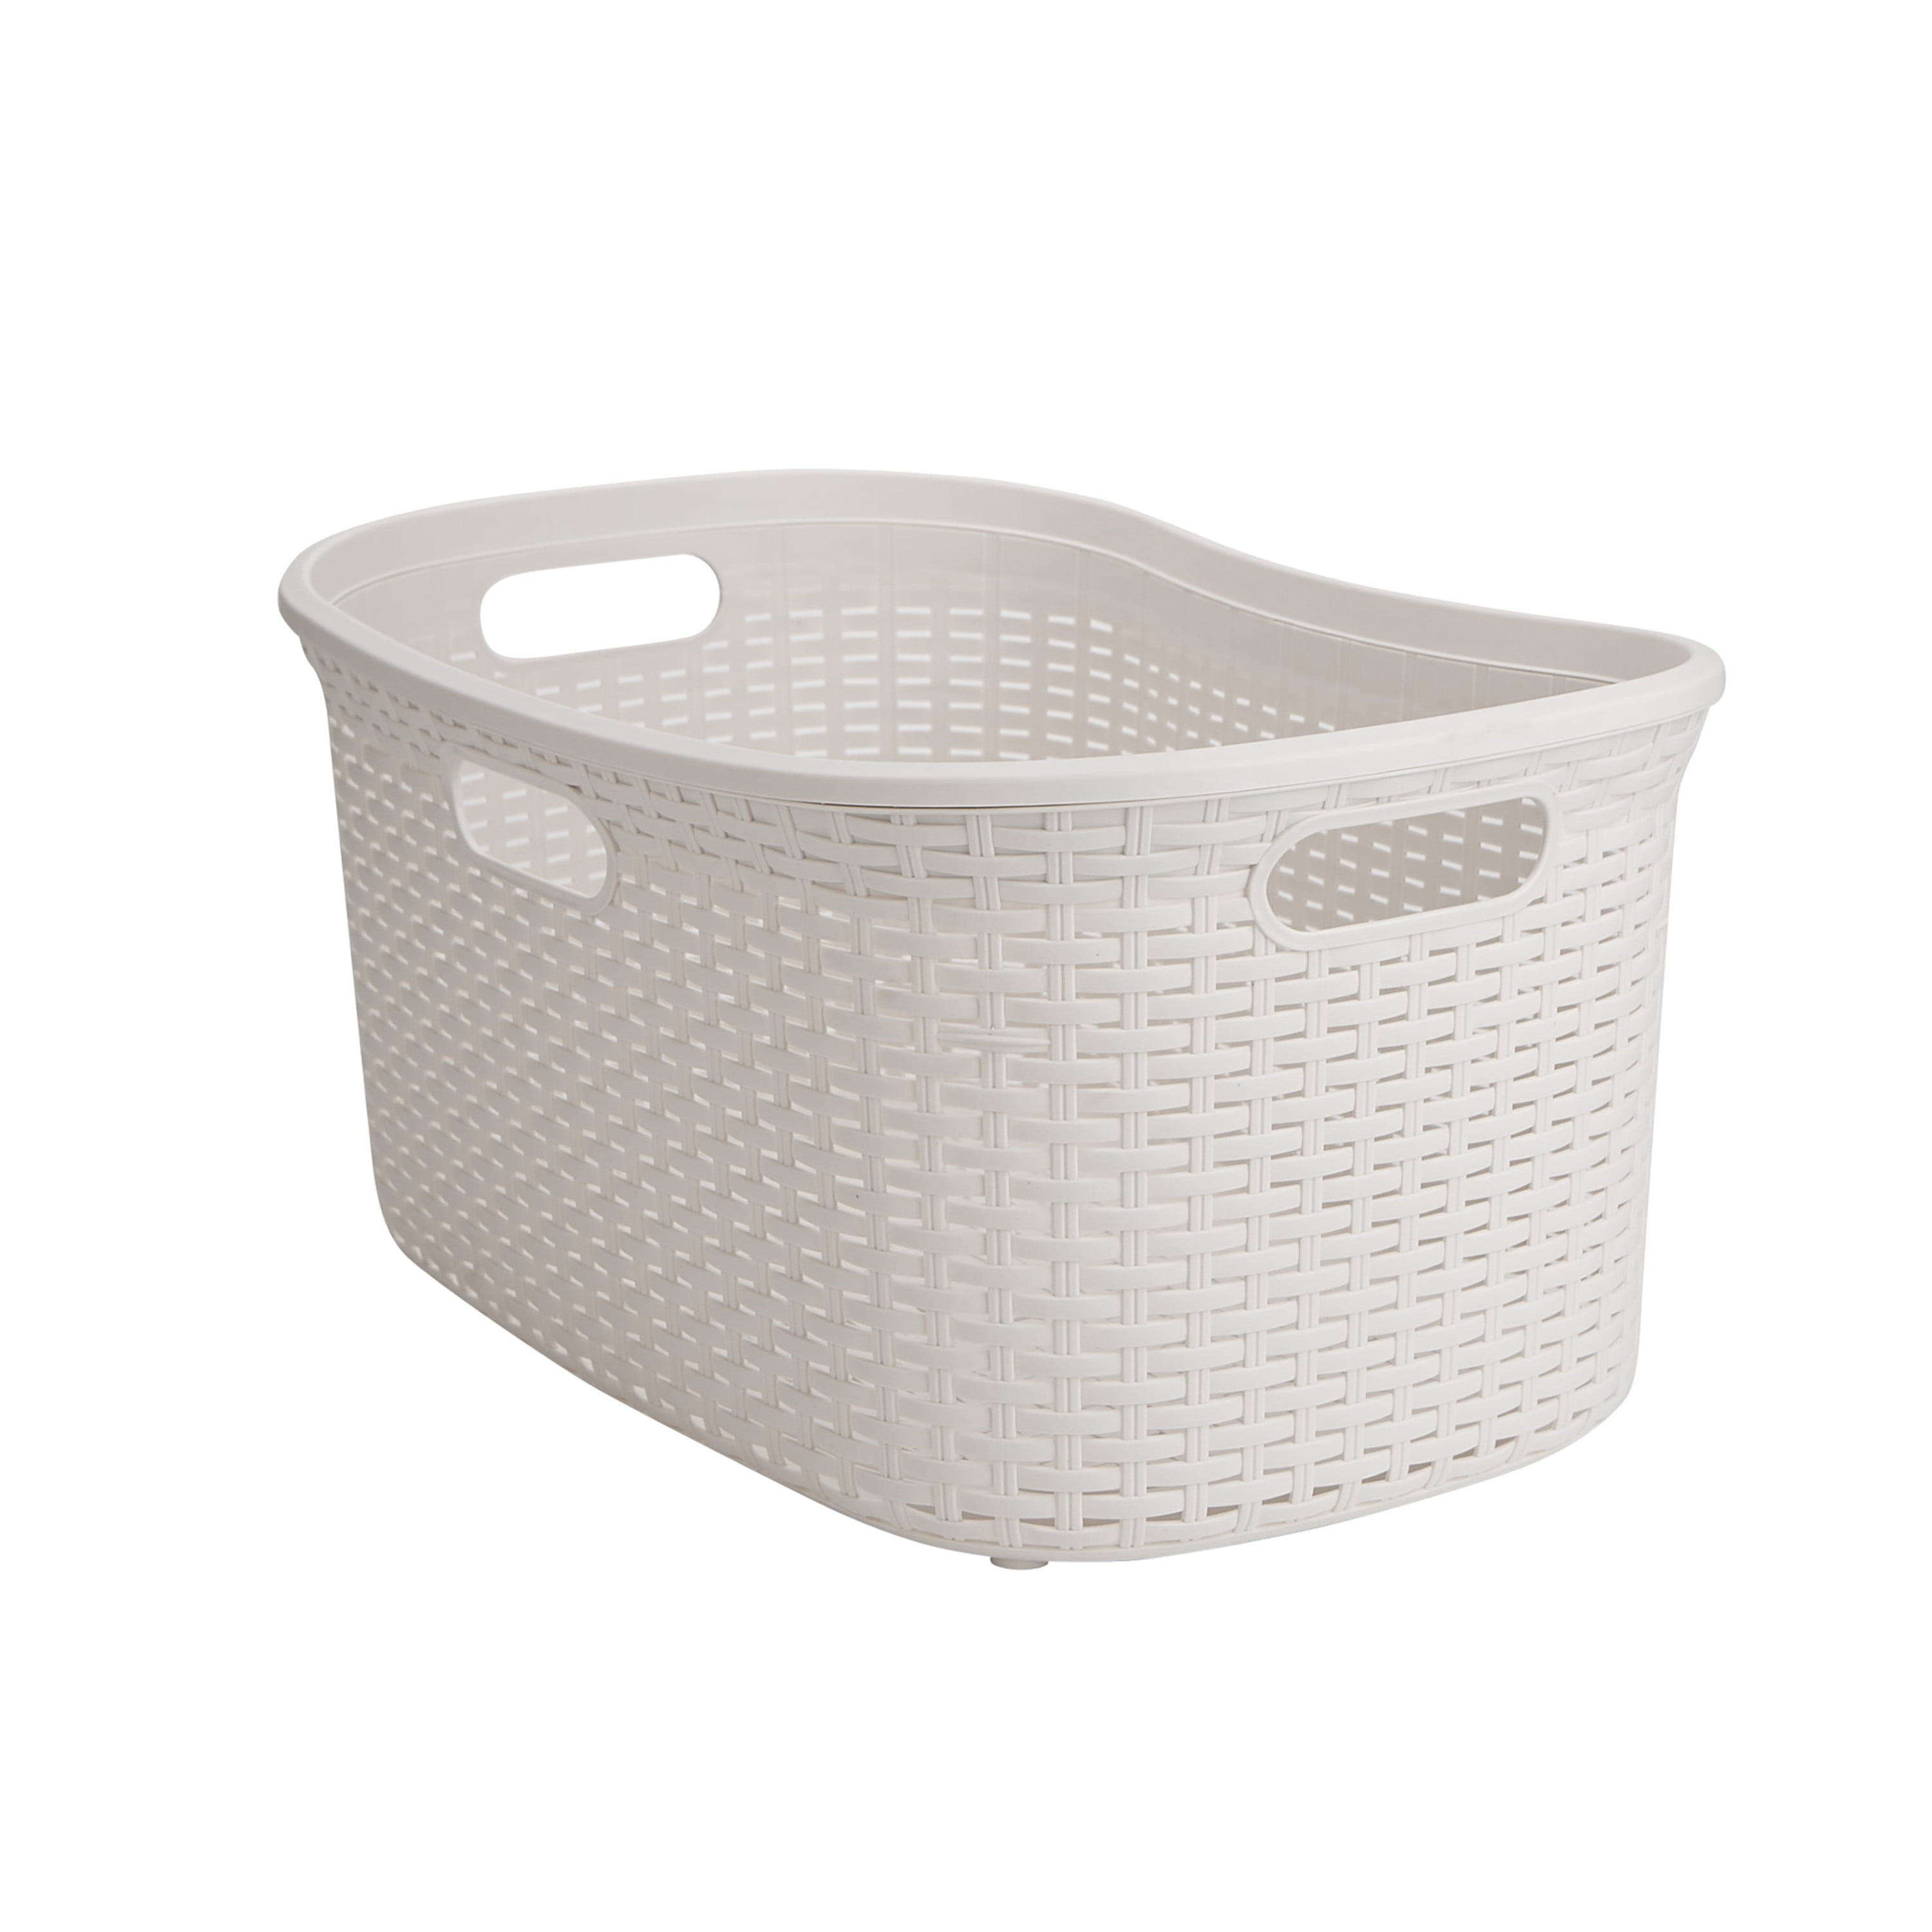 Sterilite Ultra Square Plastic Laundry Basket, White, 6 Pack 